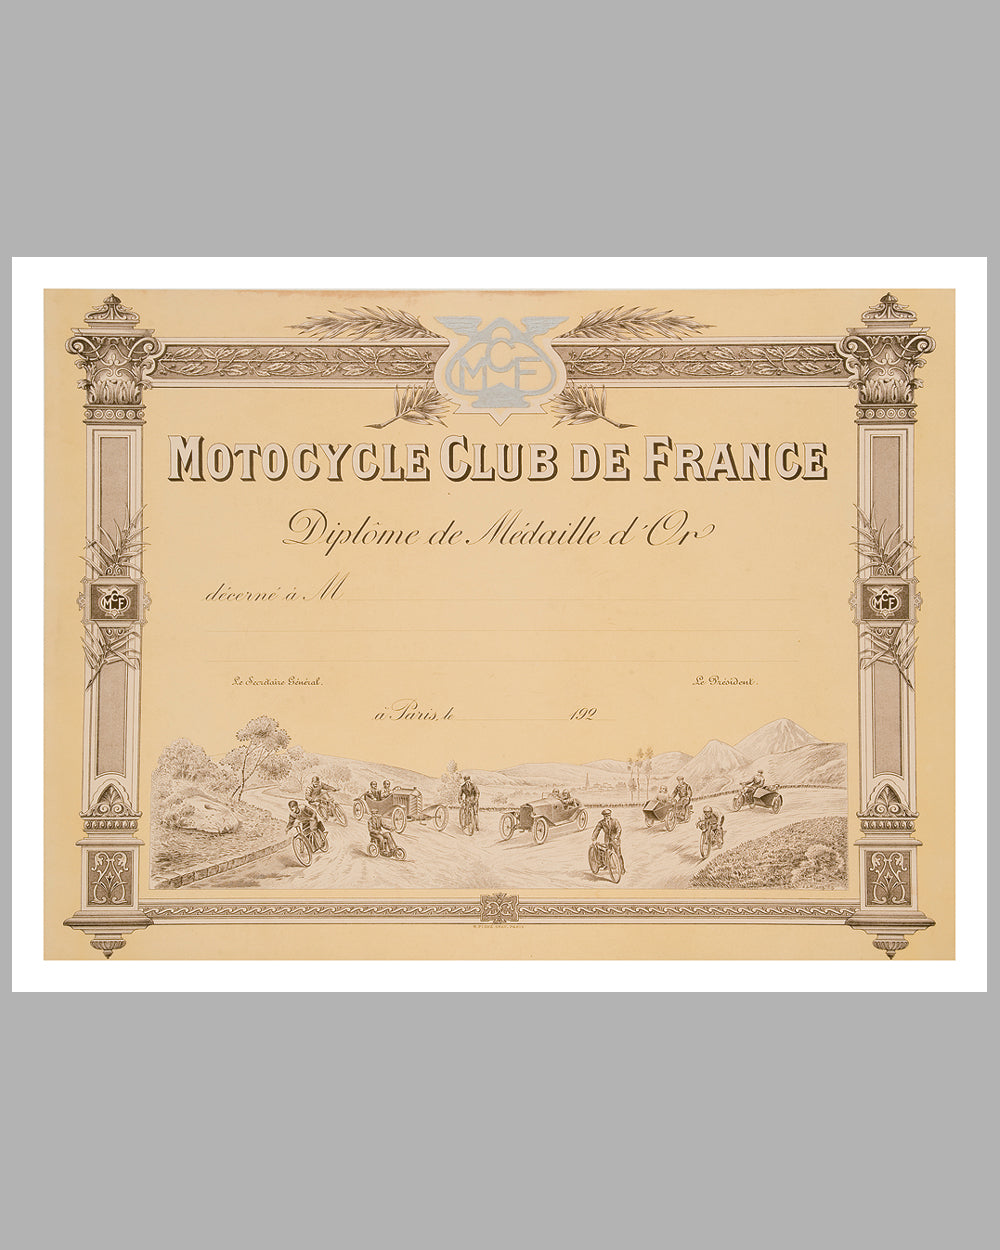 Motocycle Club de France Diplome original by Langlois